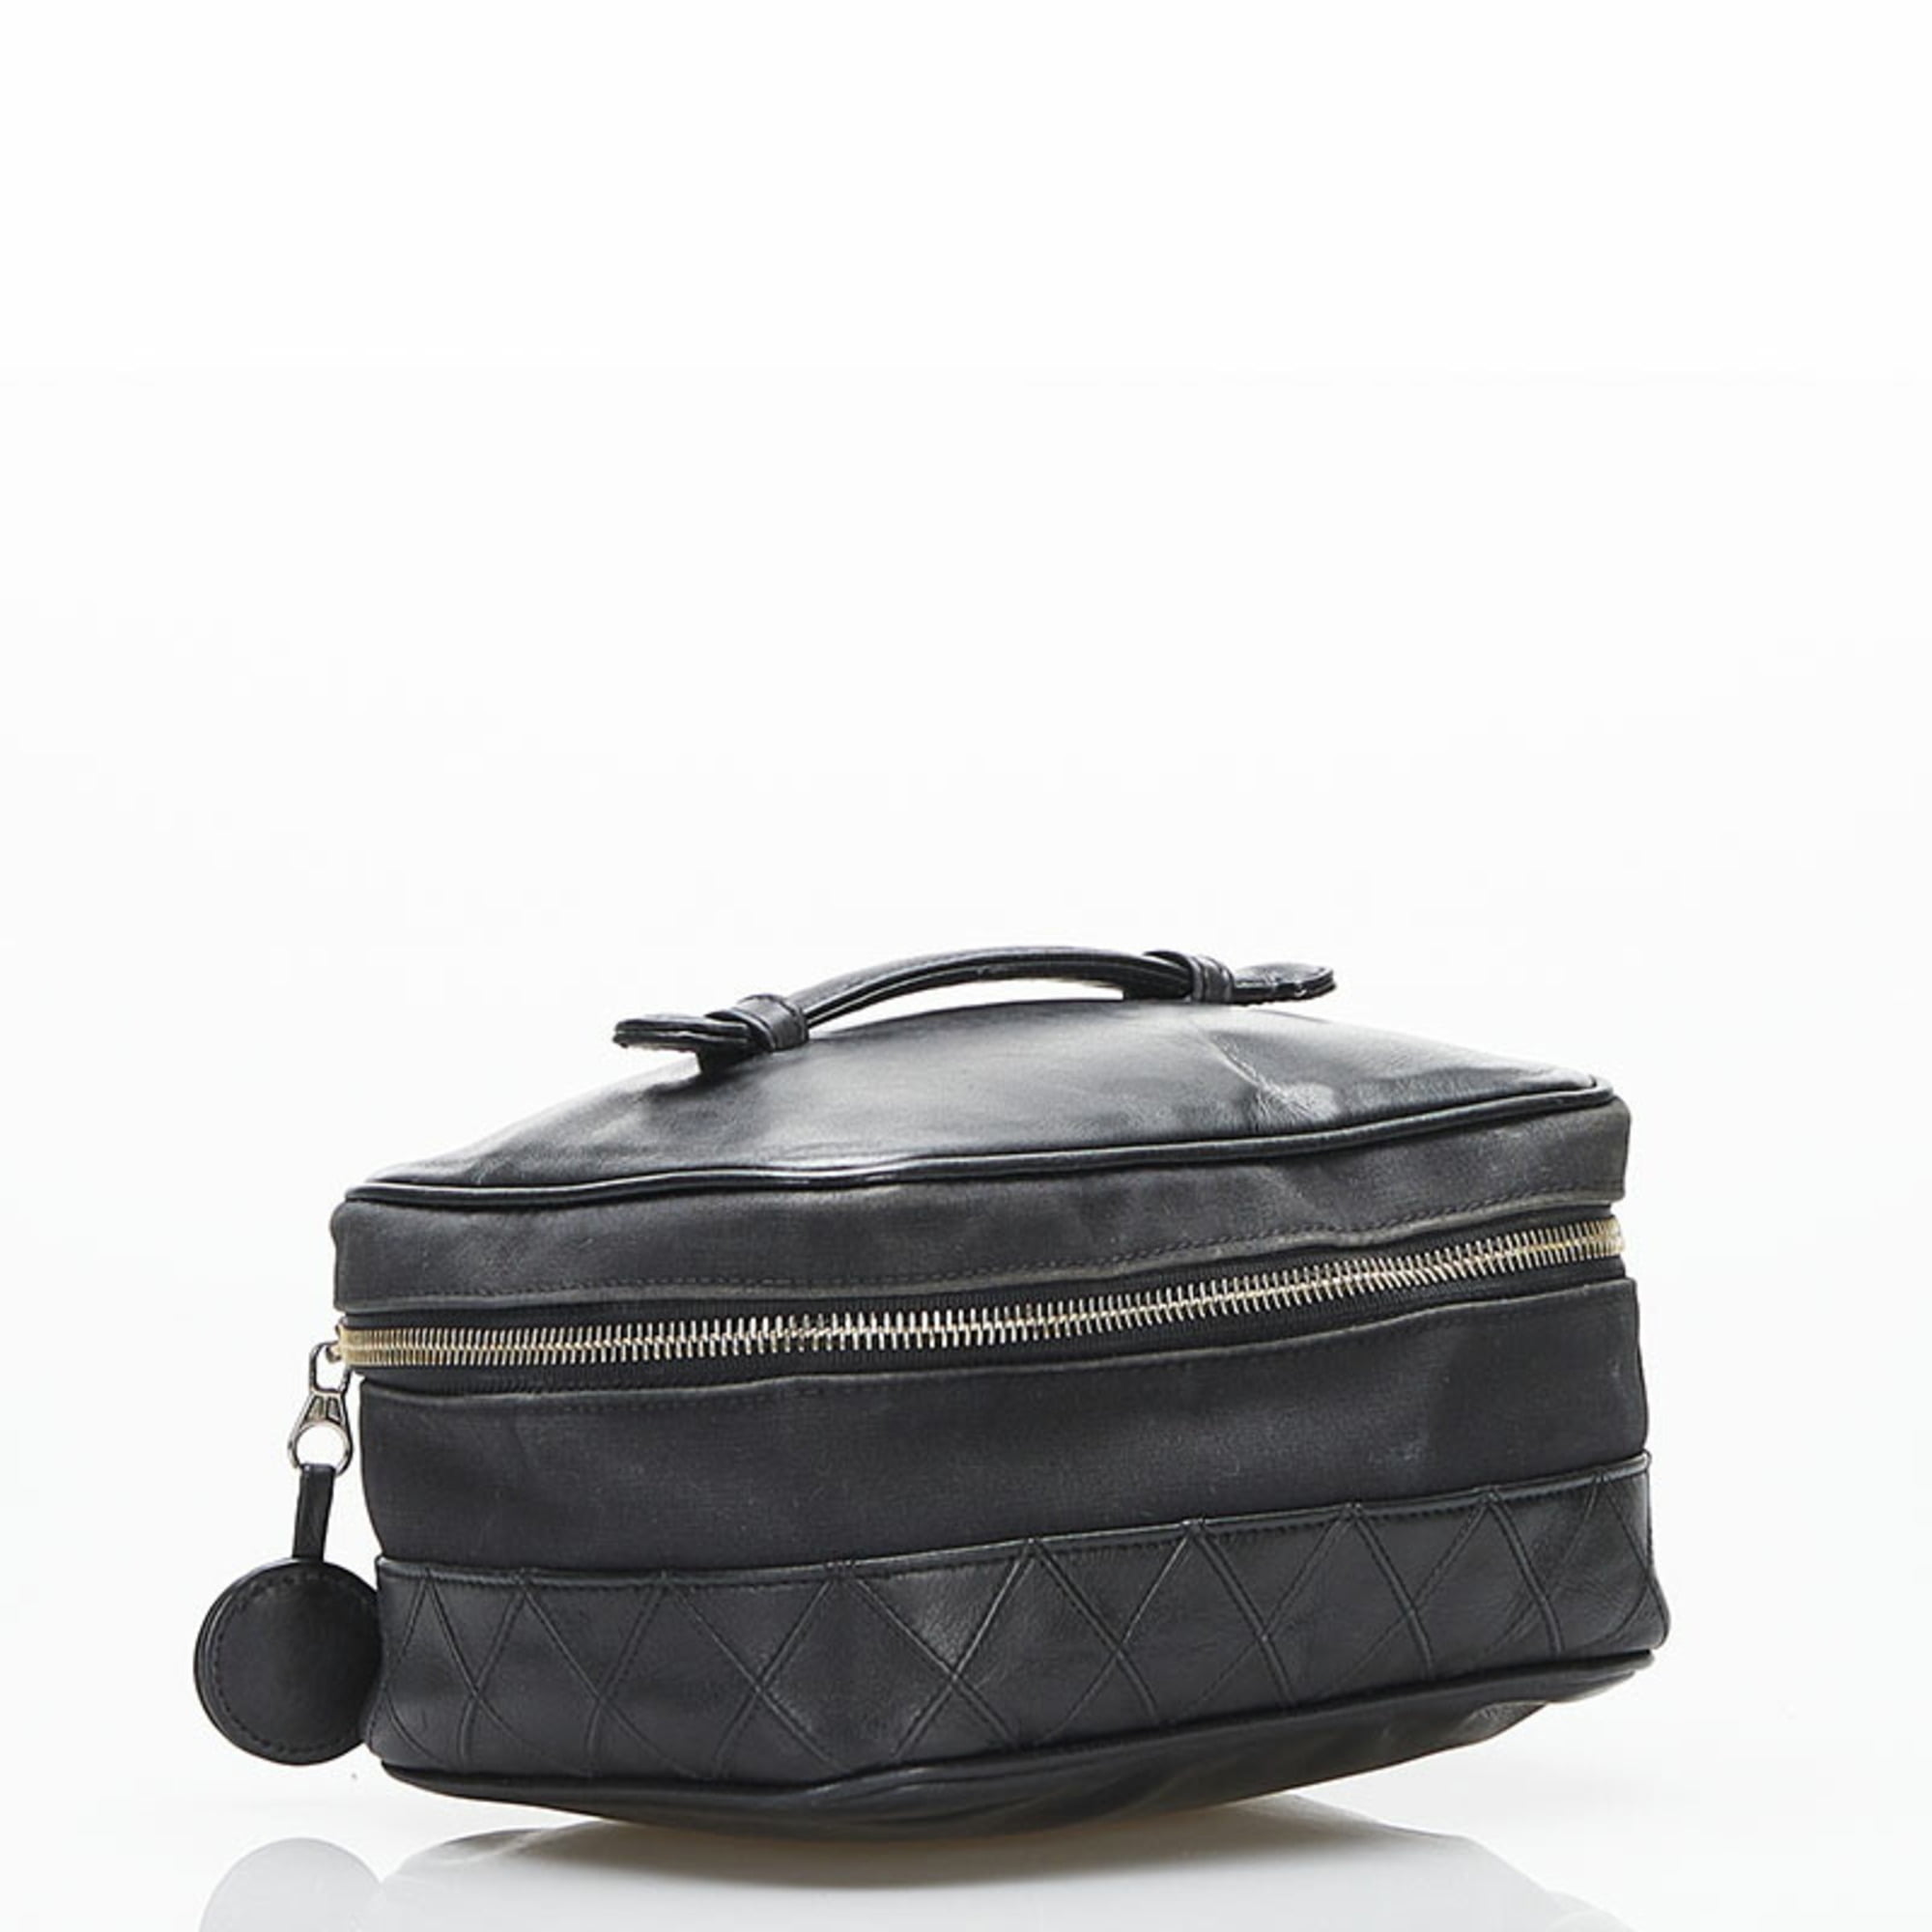 Authenticated Used Chanel coco mark vanity bag handbag black leather ladies  CHANEL